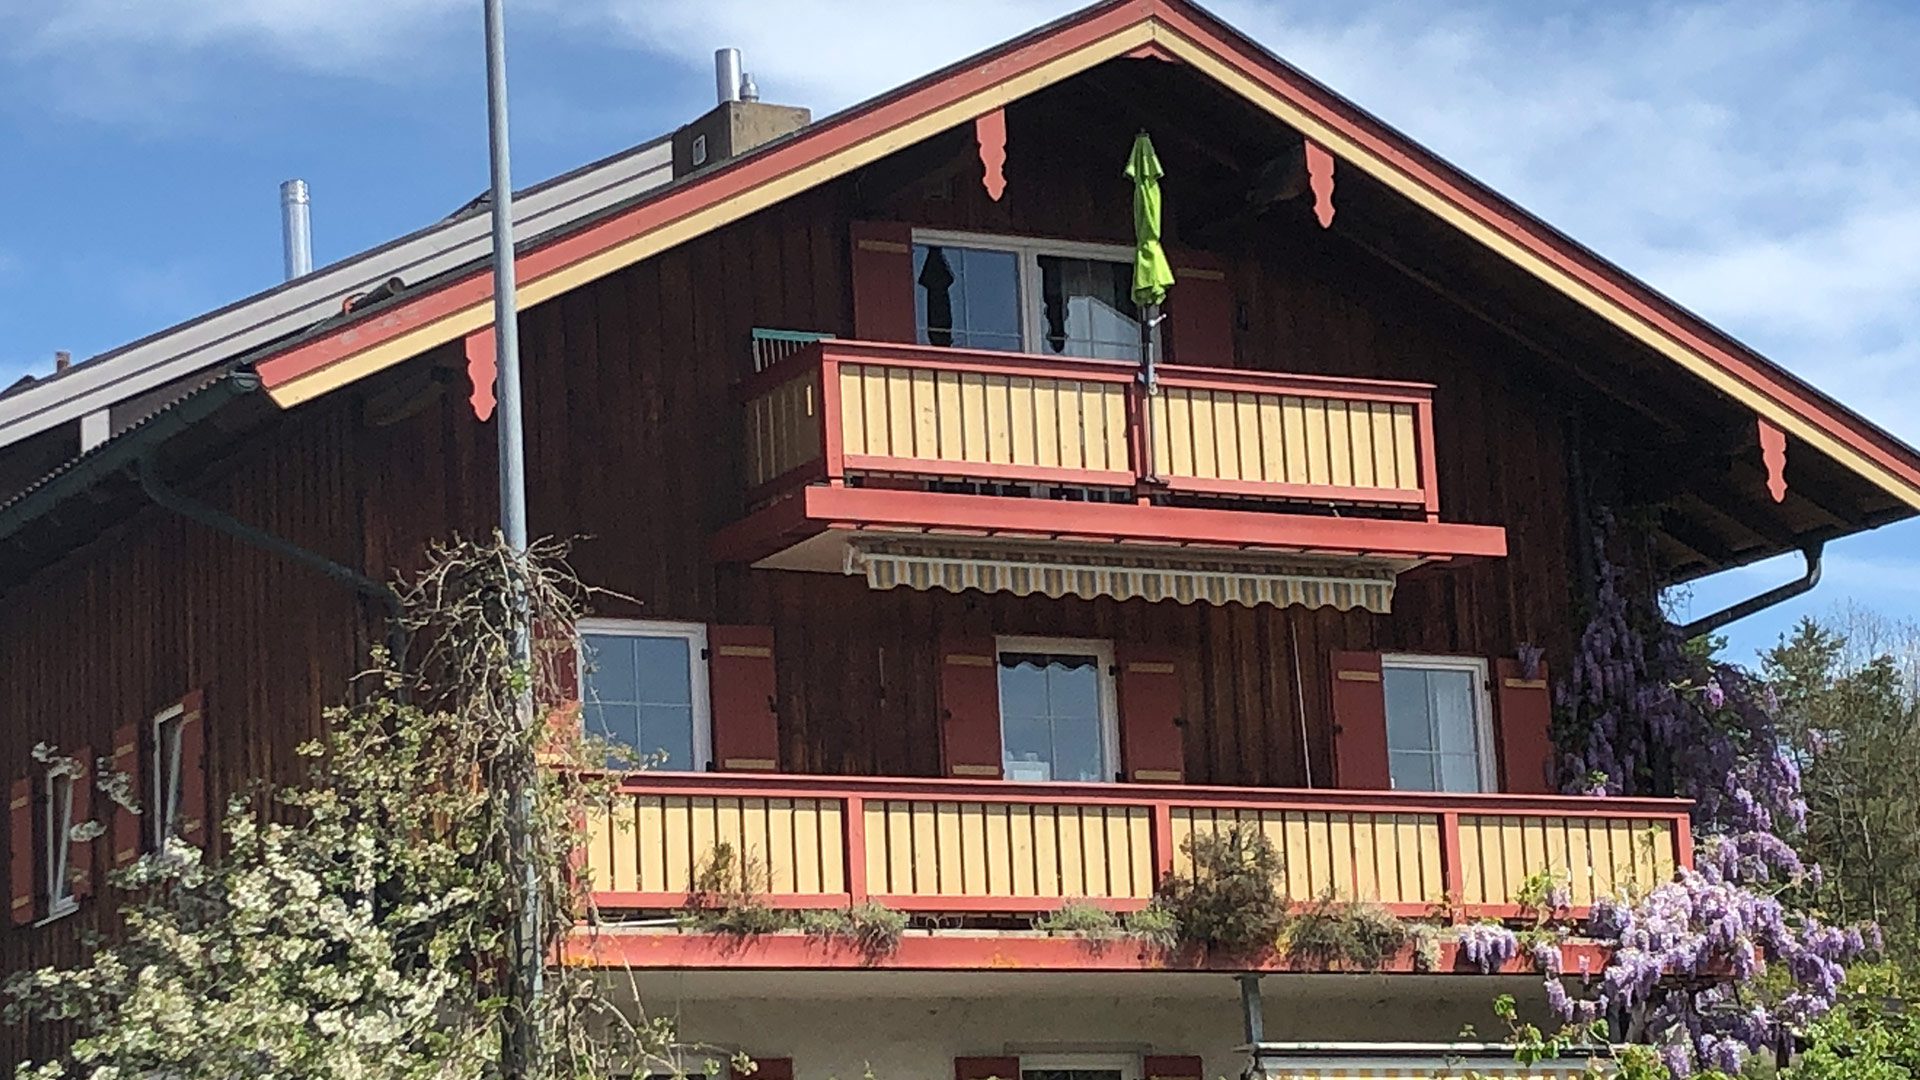 Haus Oberland in Bad Endorf